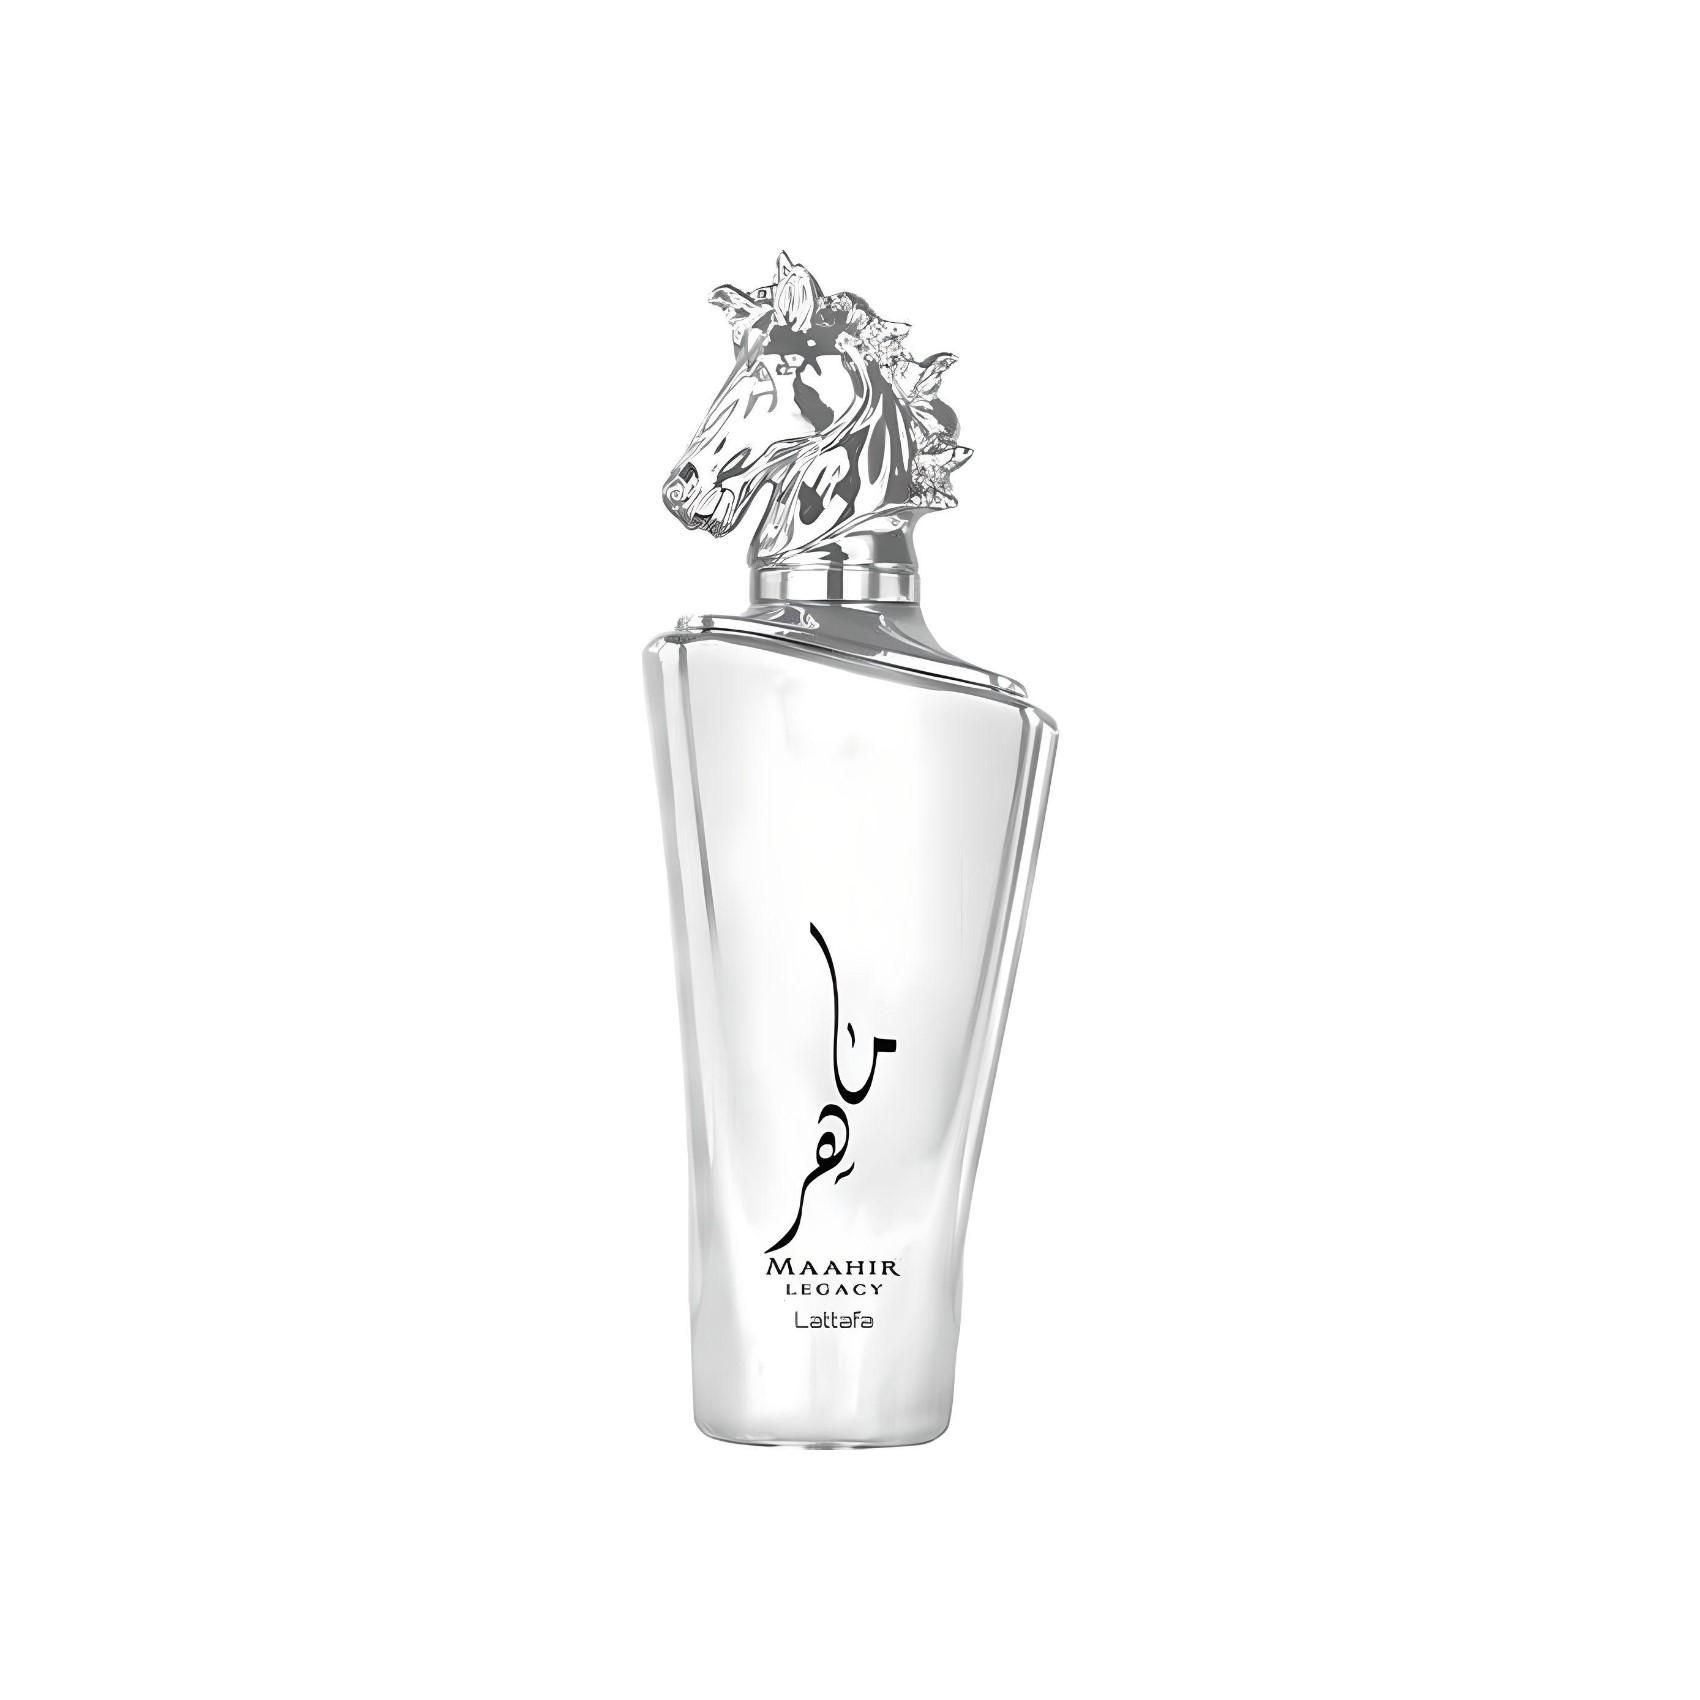 Maahir Legacy Perfume 100Ml Edp By Lattafa